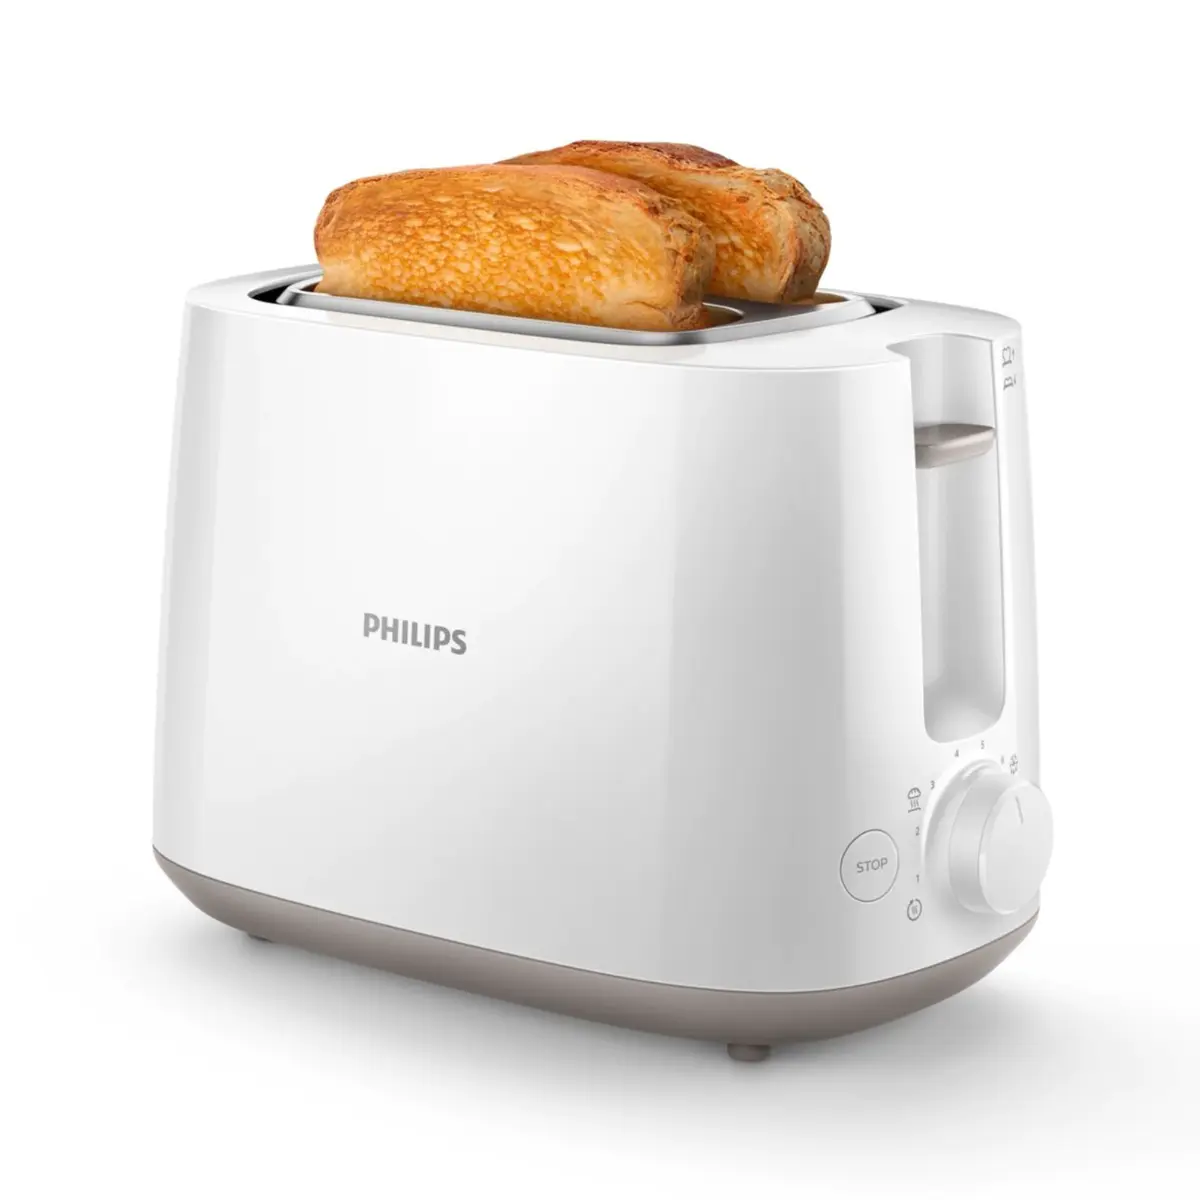 Prajitor de paine Philips HD2581, putere 750 W, 2 felii, Alb